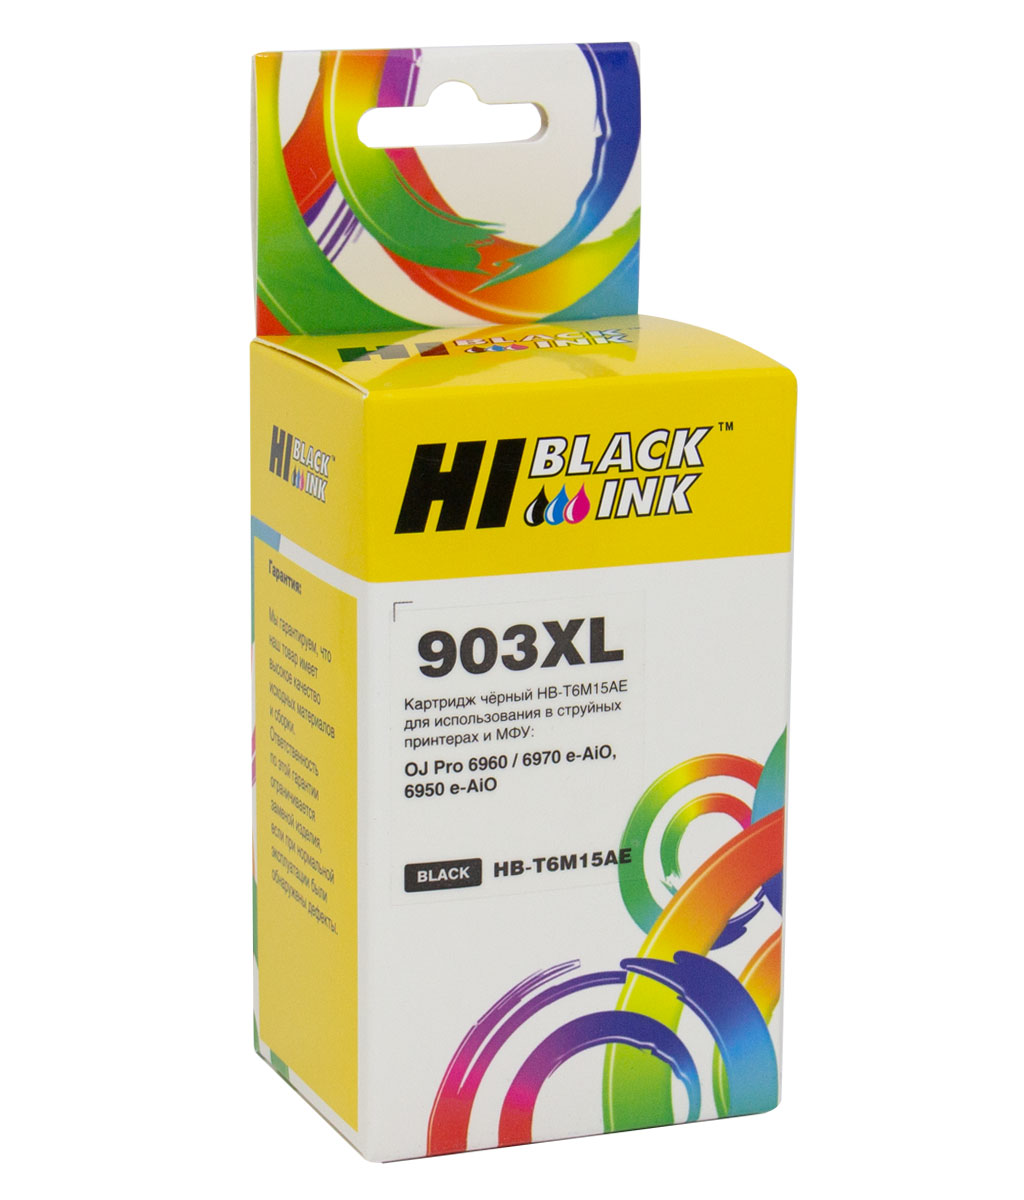 Картридж Hi-Black (T6M15AE) для HP OJP 6960/6970, Bk,№903XL NEW